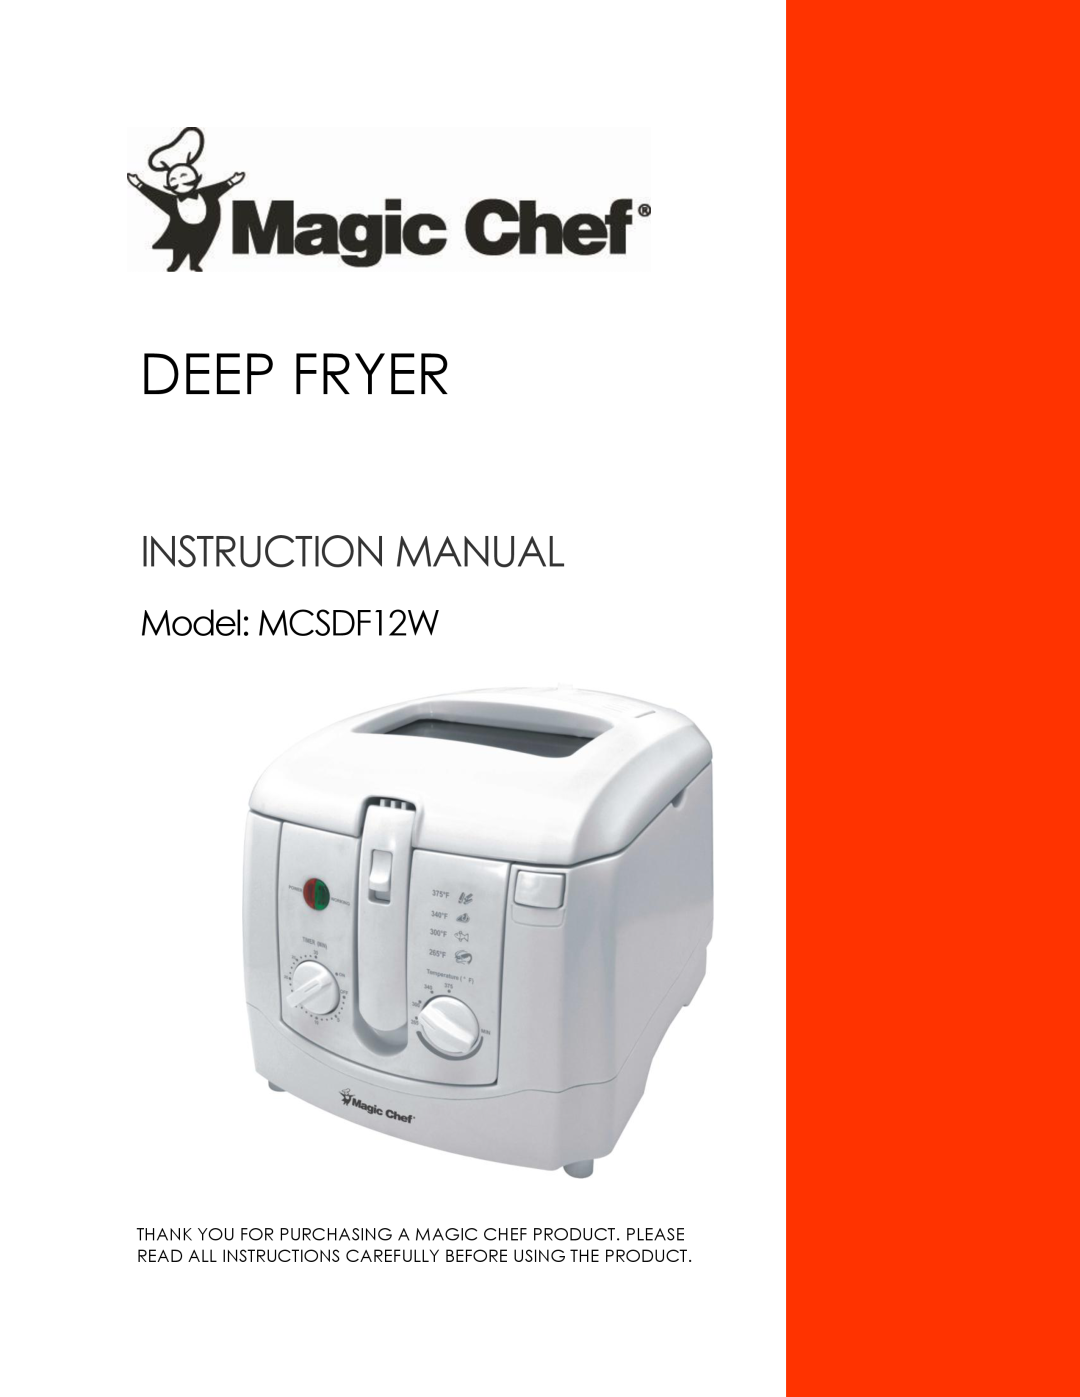 Magic Chef instruction manual Deep Fryer, Model MCSDF12W 